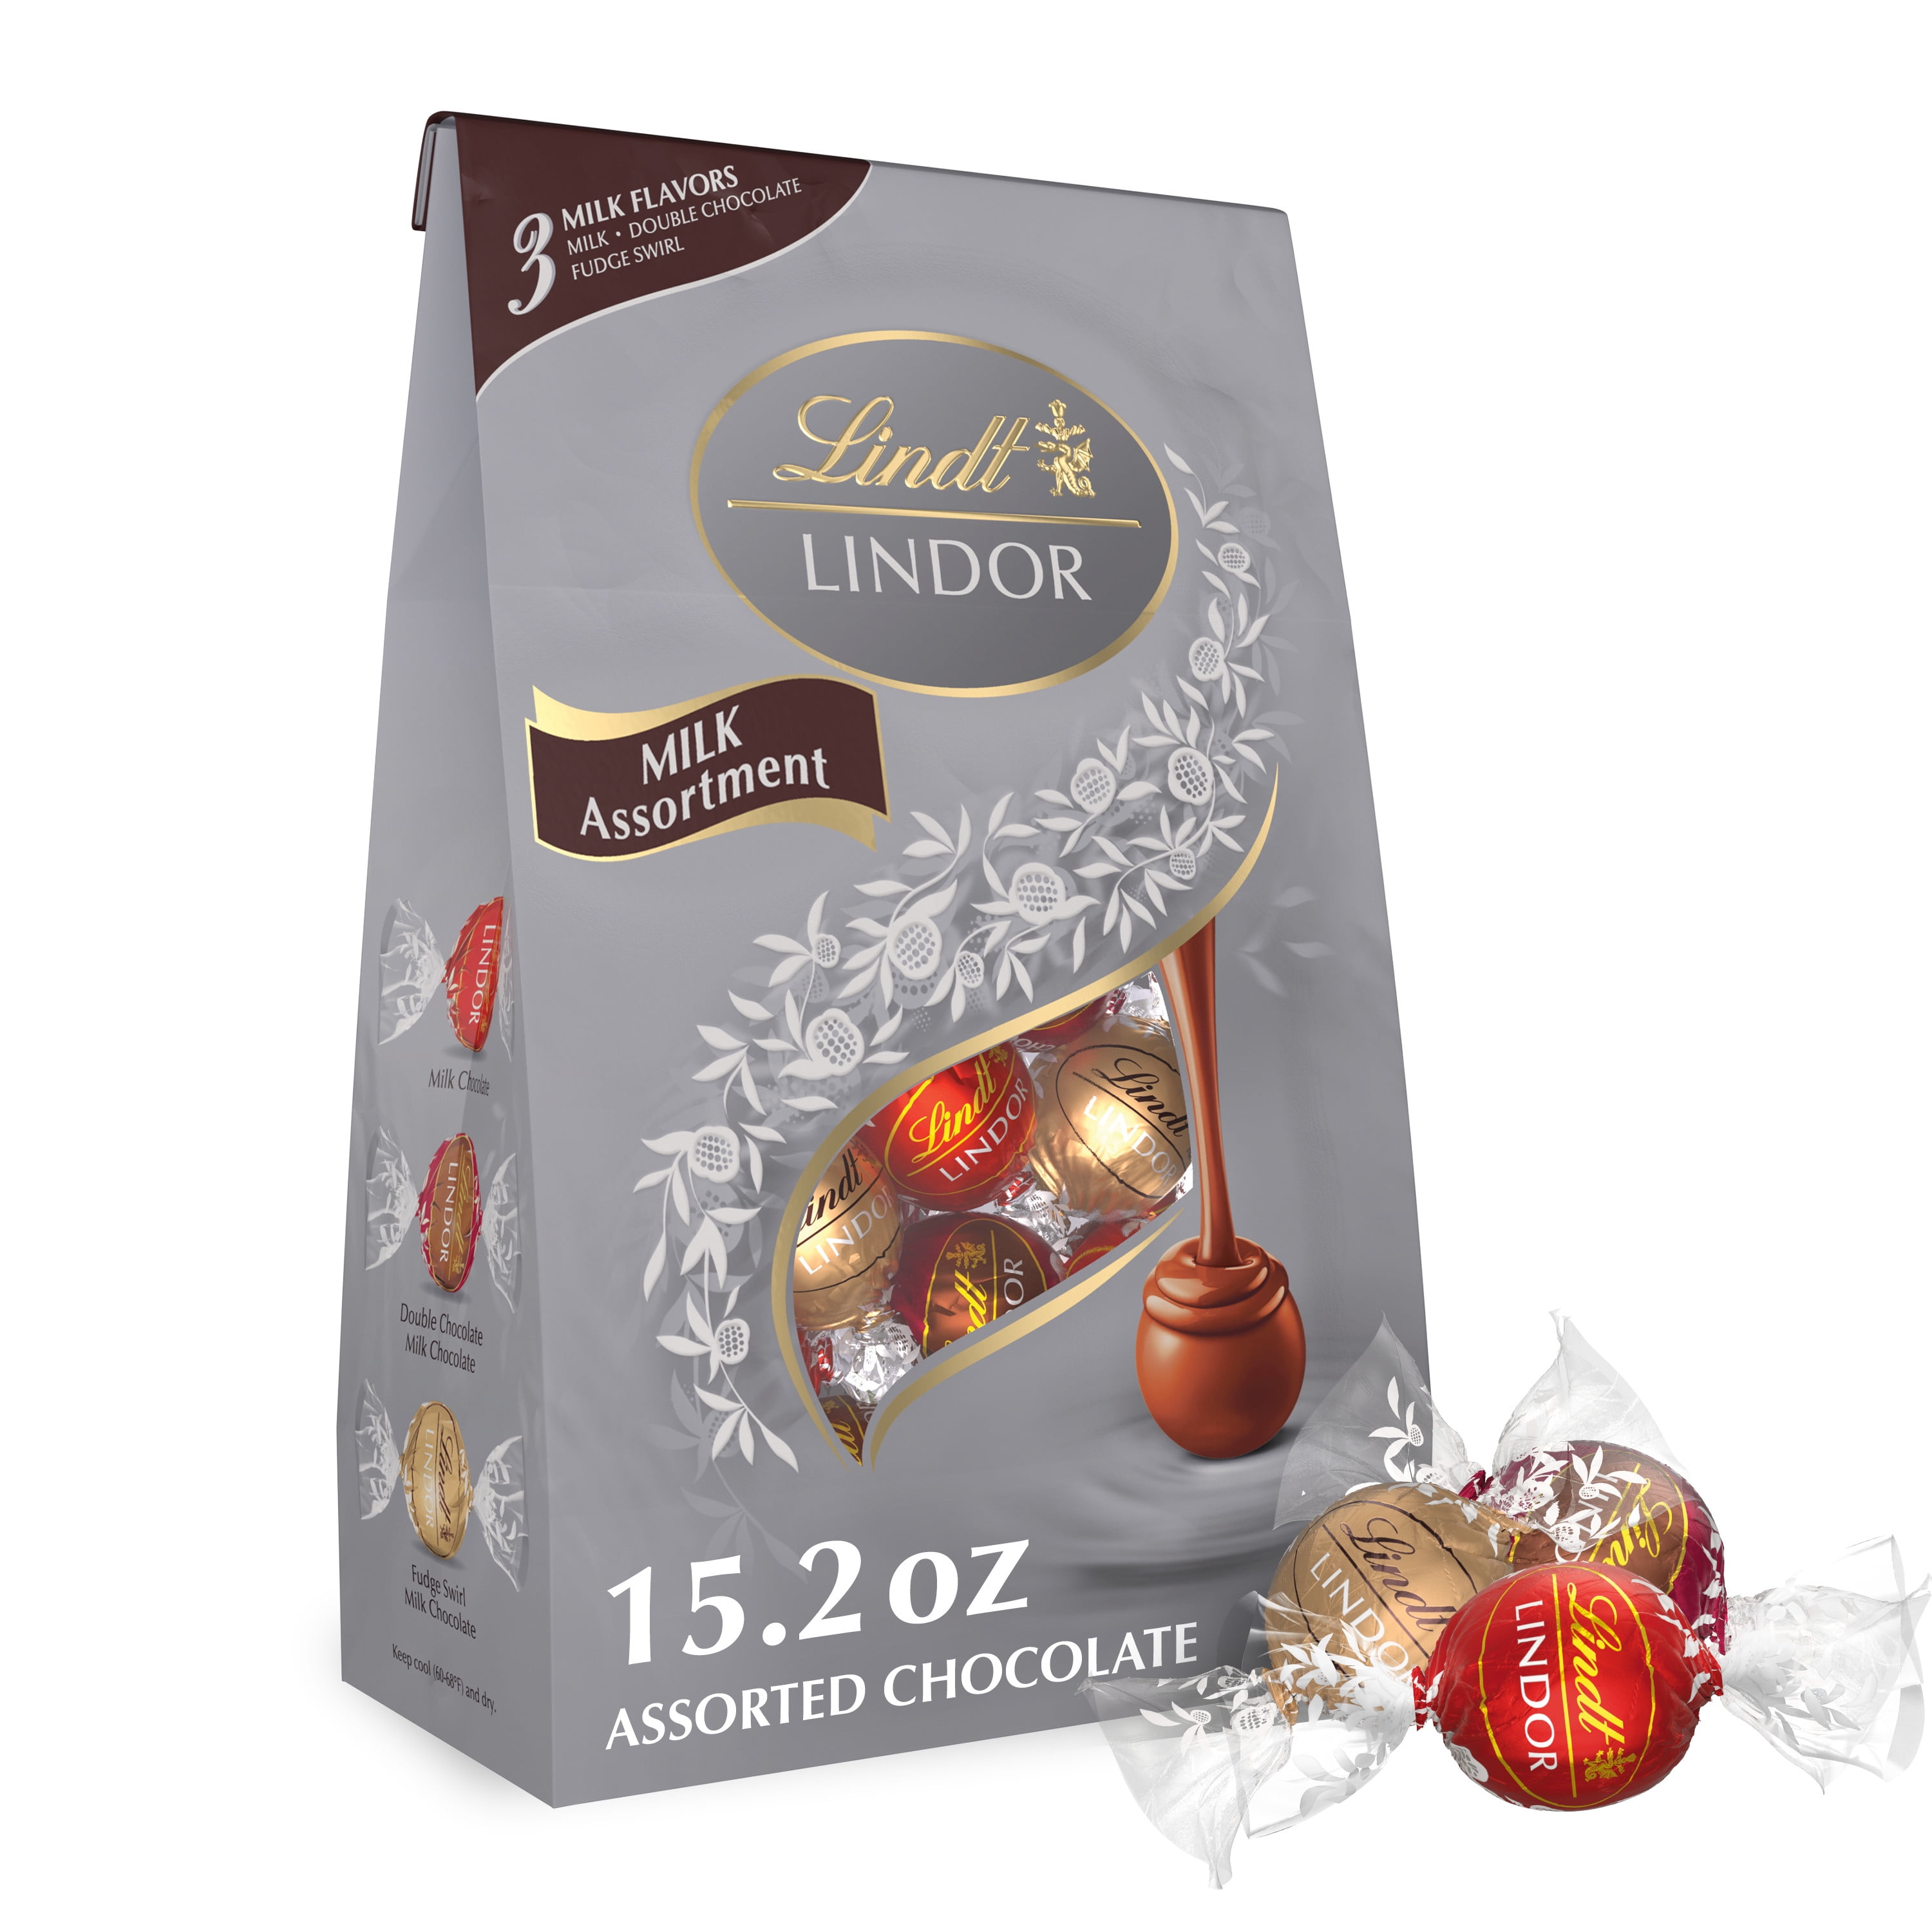 Lindt Chocolate Lindor Truffles - 120ct